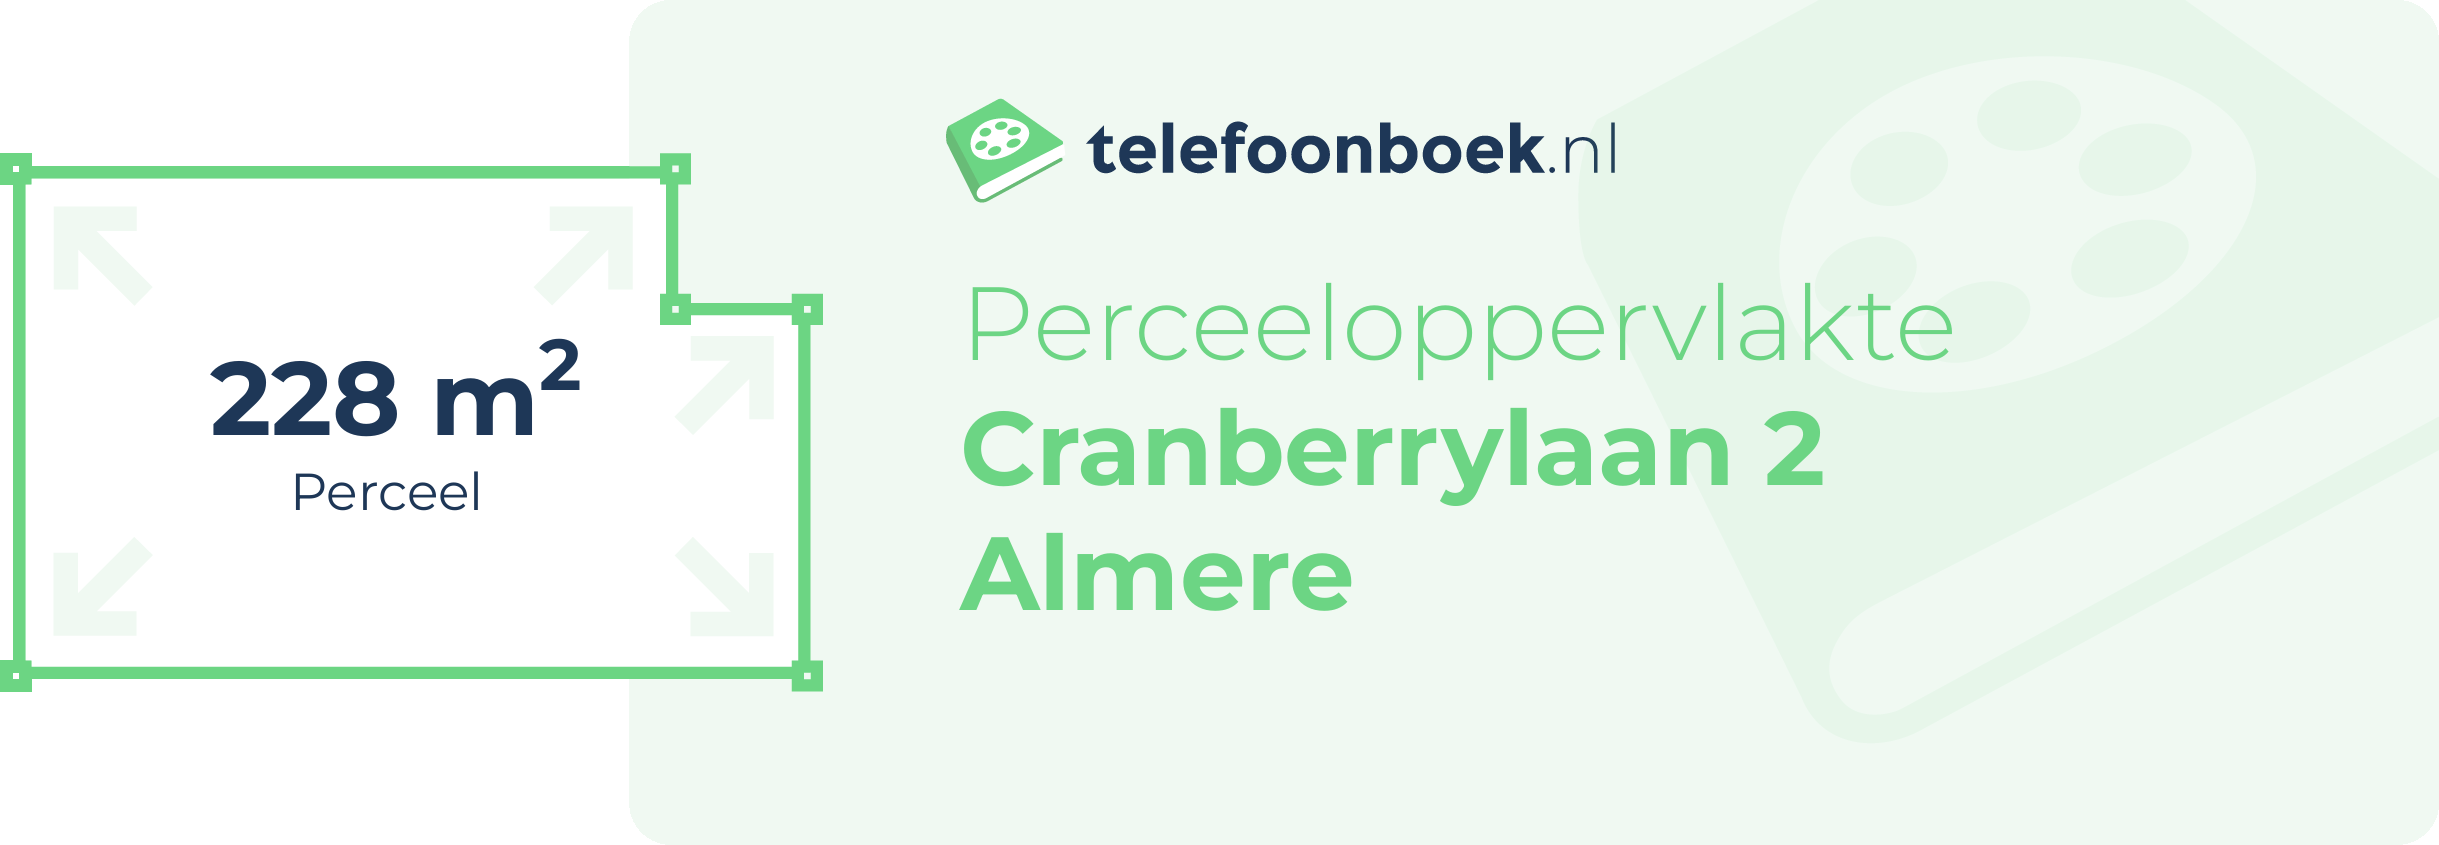 Perceeloppervlakte Cranberrylaan 2 Almere